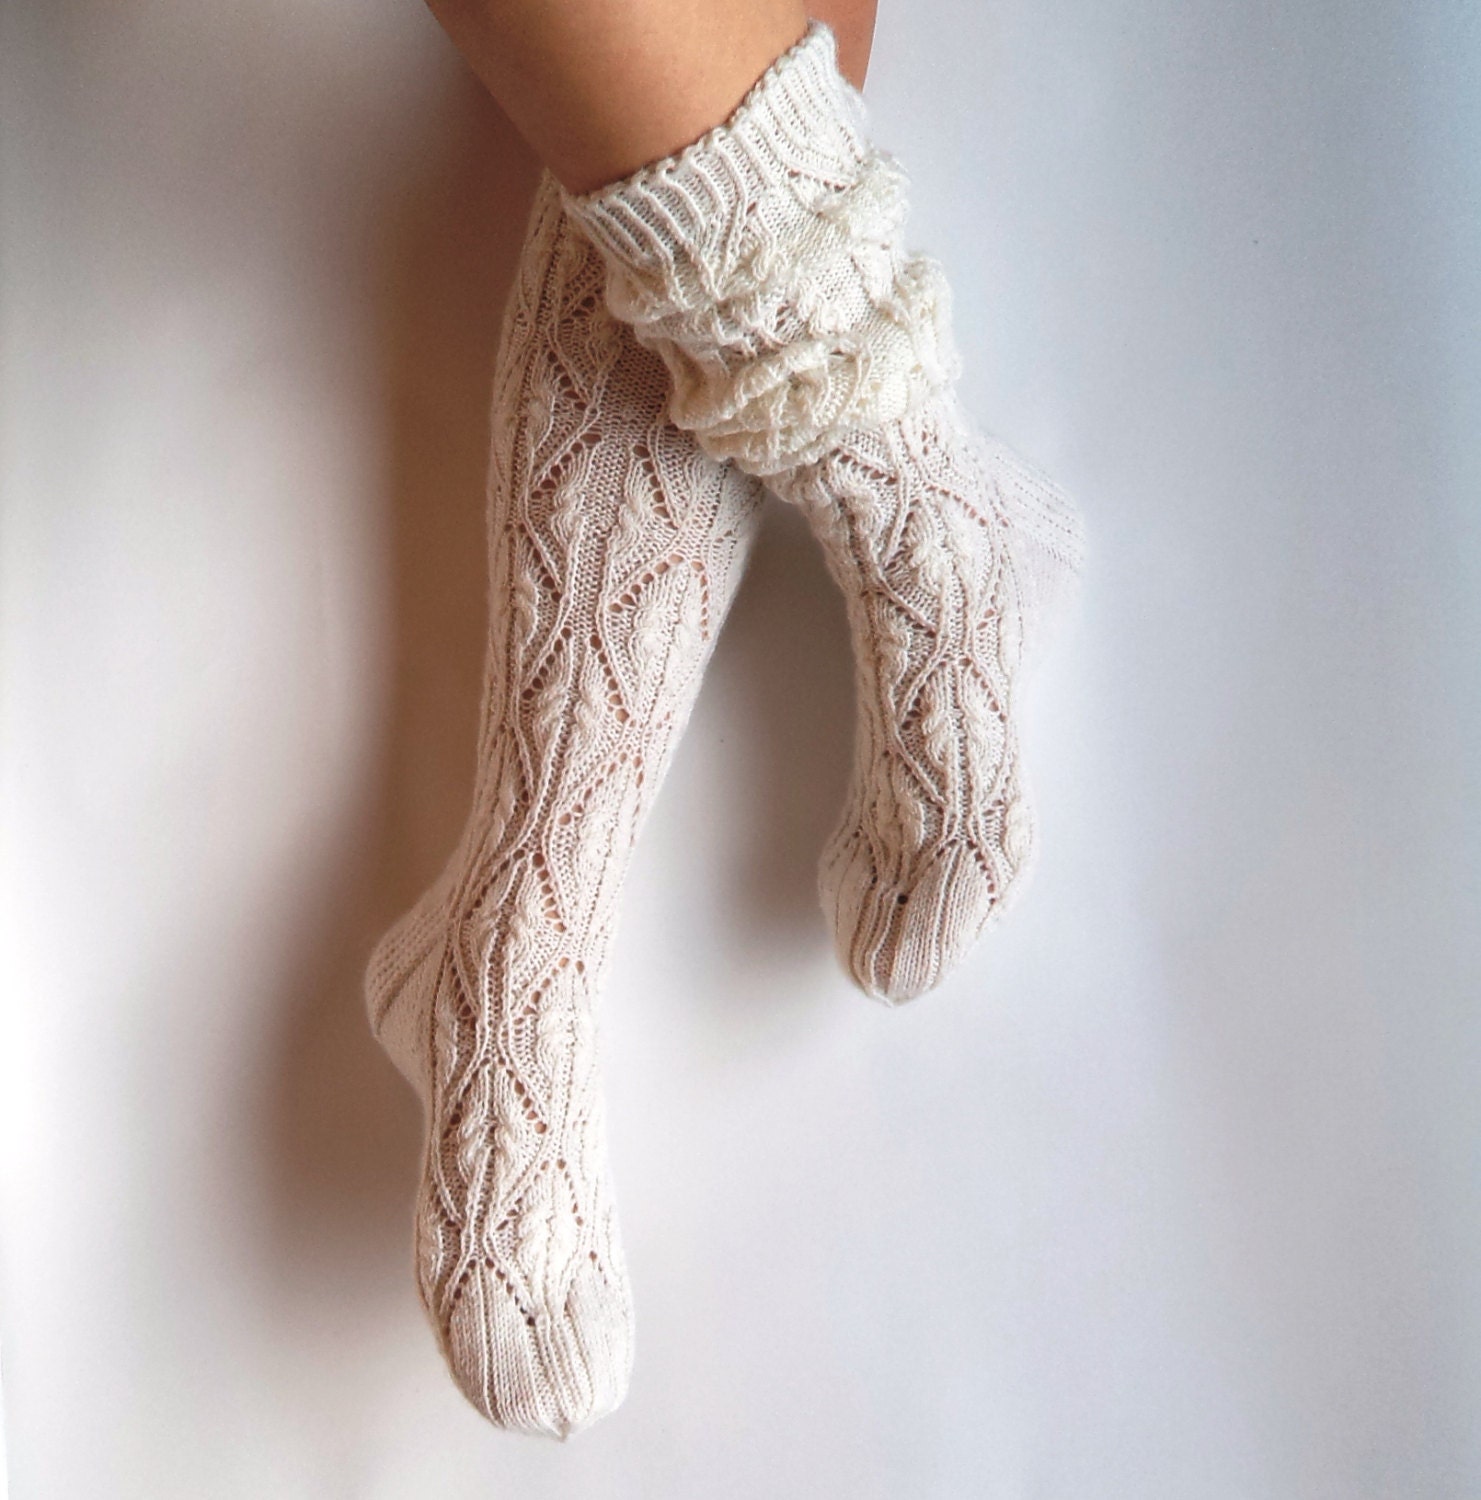 Lace boot socks. Knee high socks. Leg warmers. White | Etsy